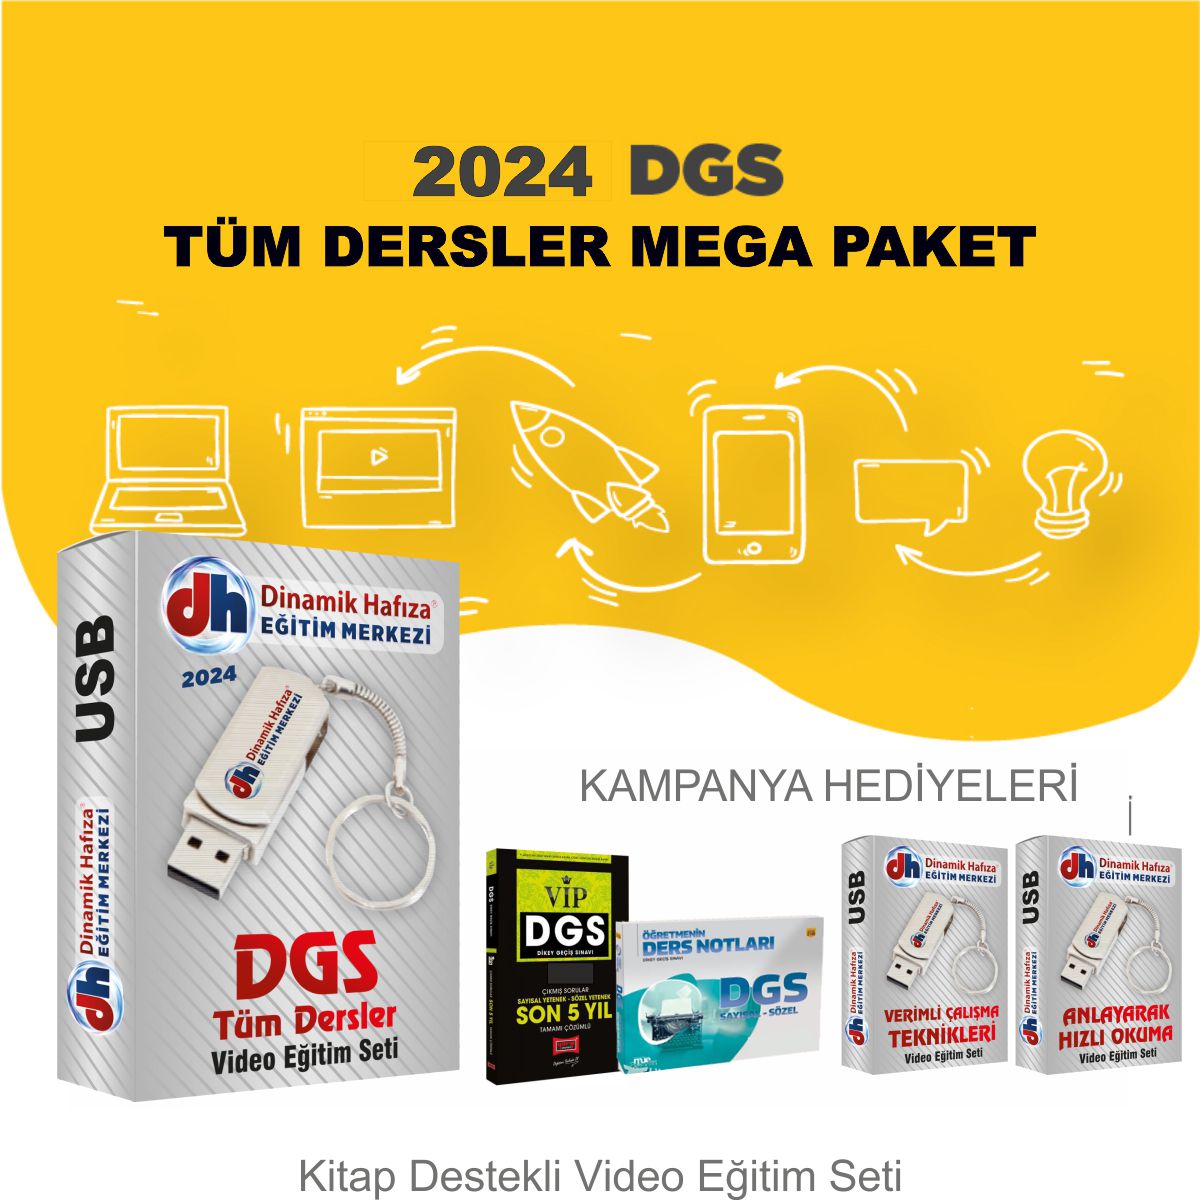 2022 DGS Tüm Dersler Mega Paket